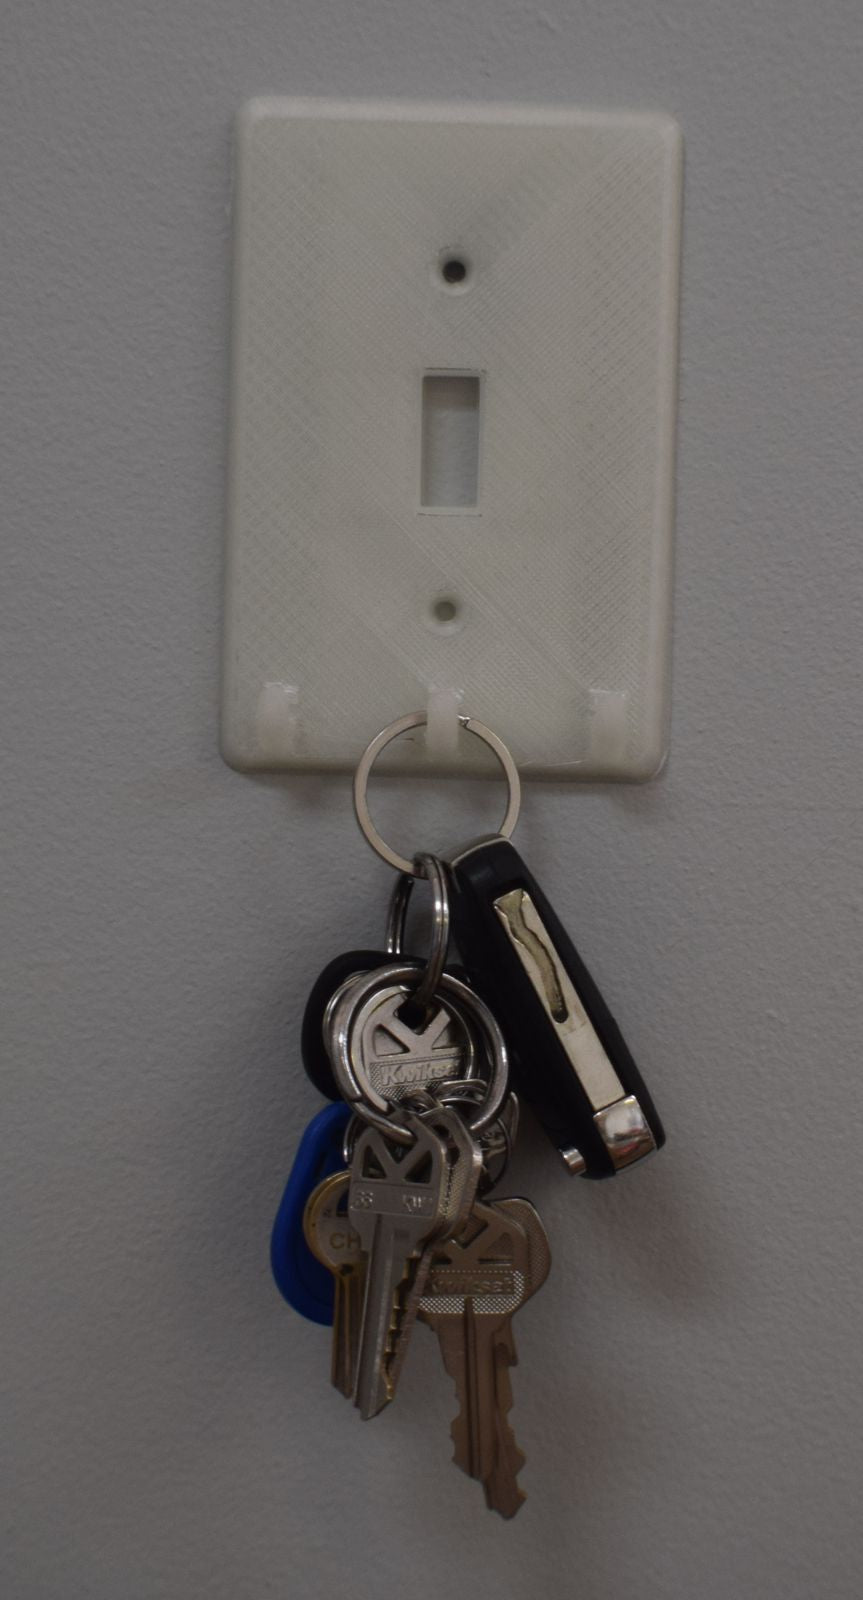 Light Switch Cover With 3 Hooks For Keys Triple Hook Multi Purpose USA PR55